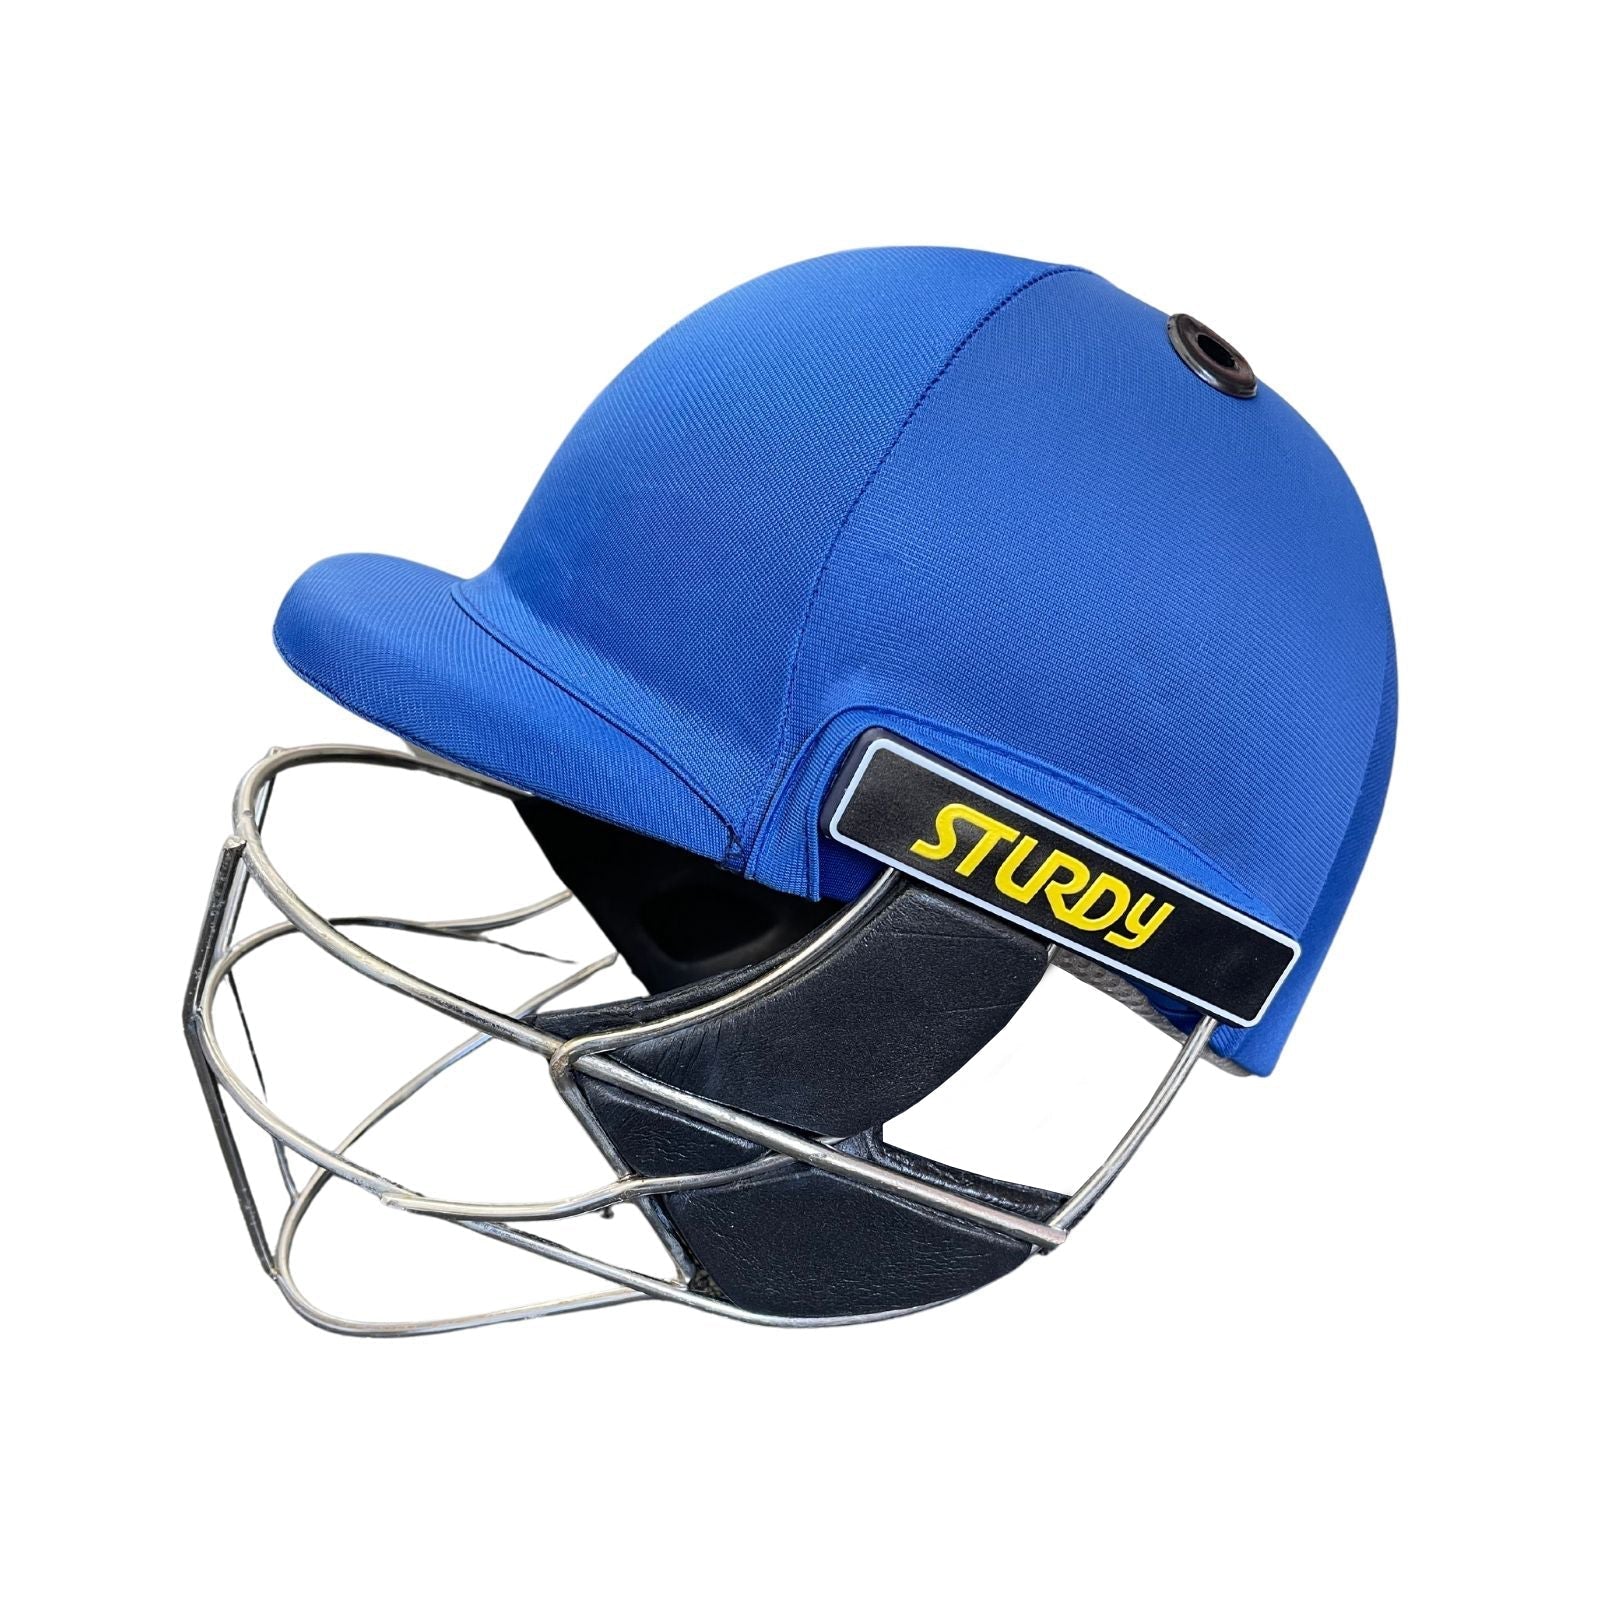 Sturdy Cheetah Royal Blue Steel Cricket Helmet - Senior